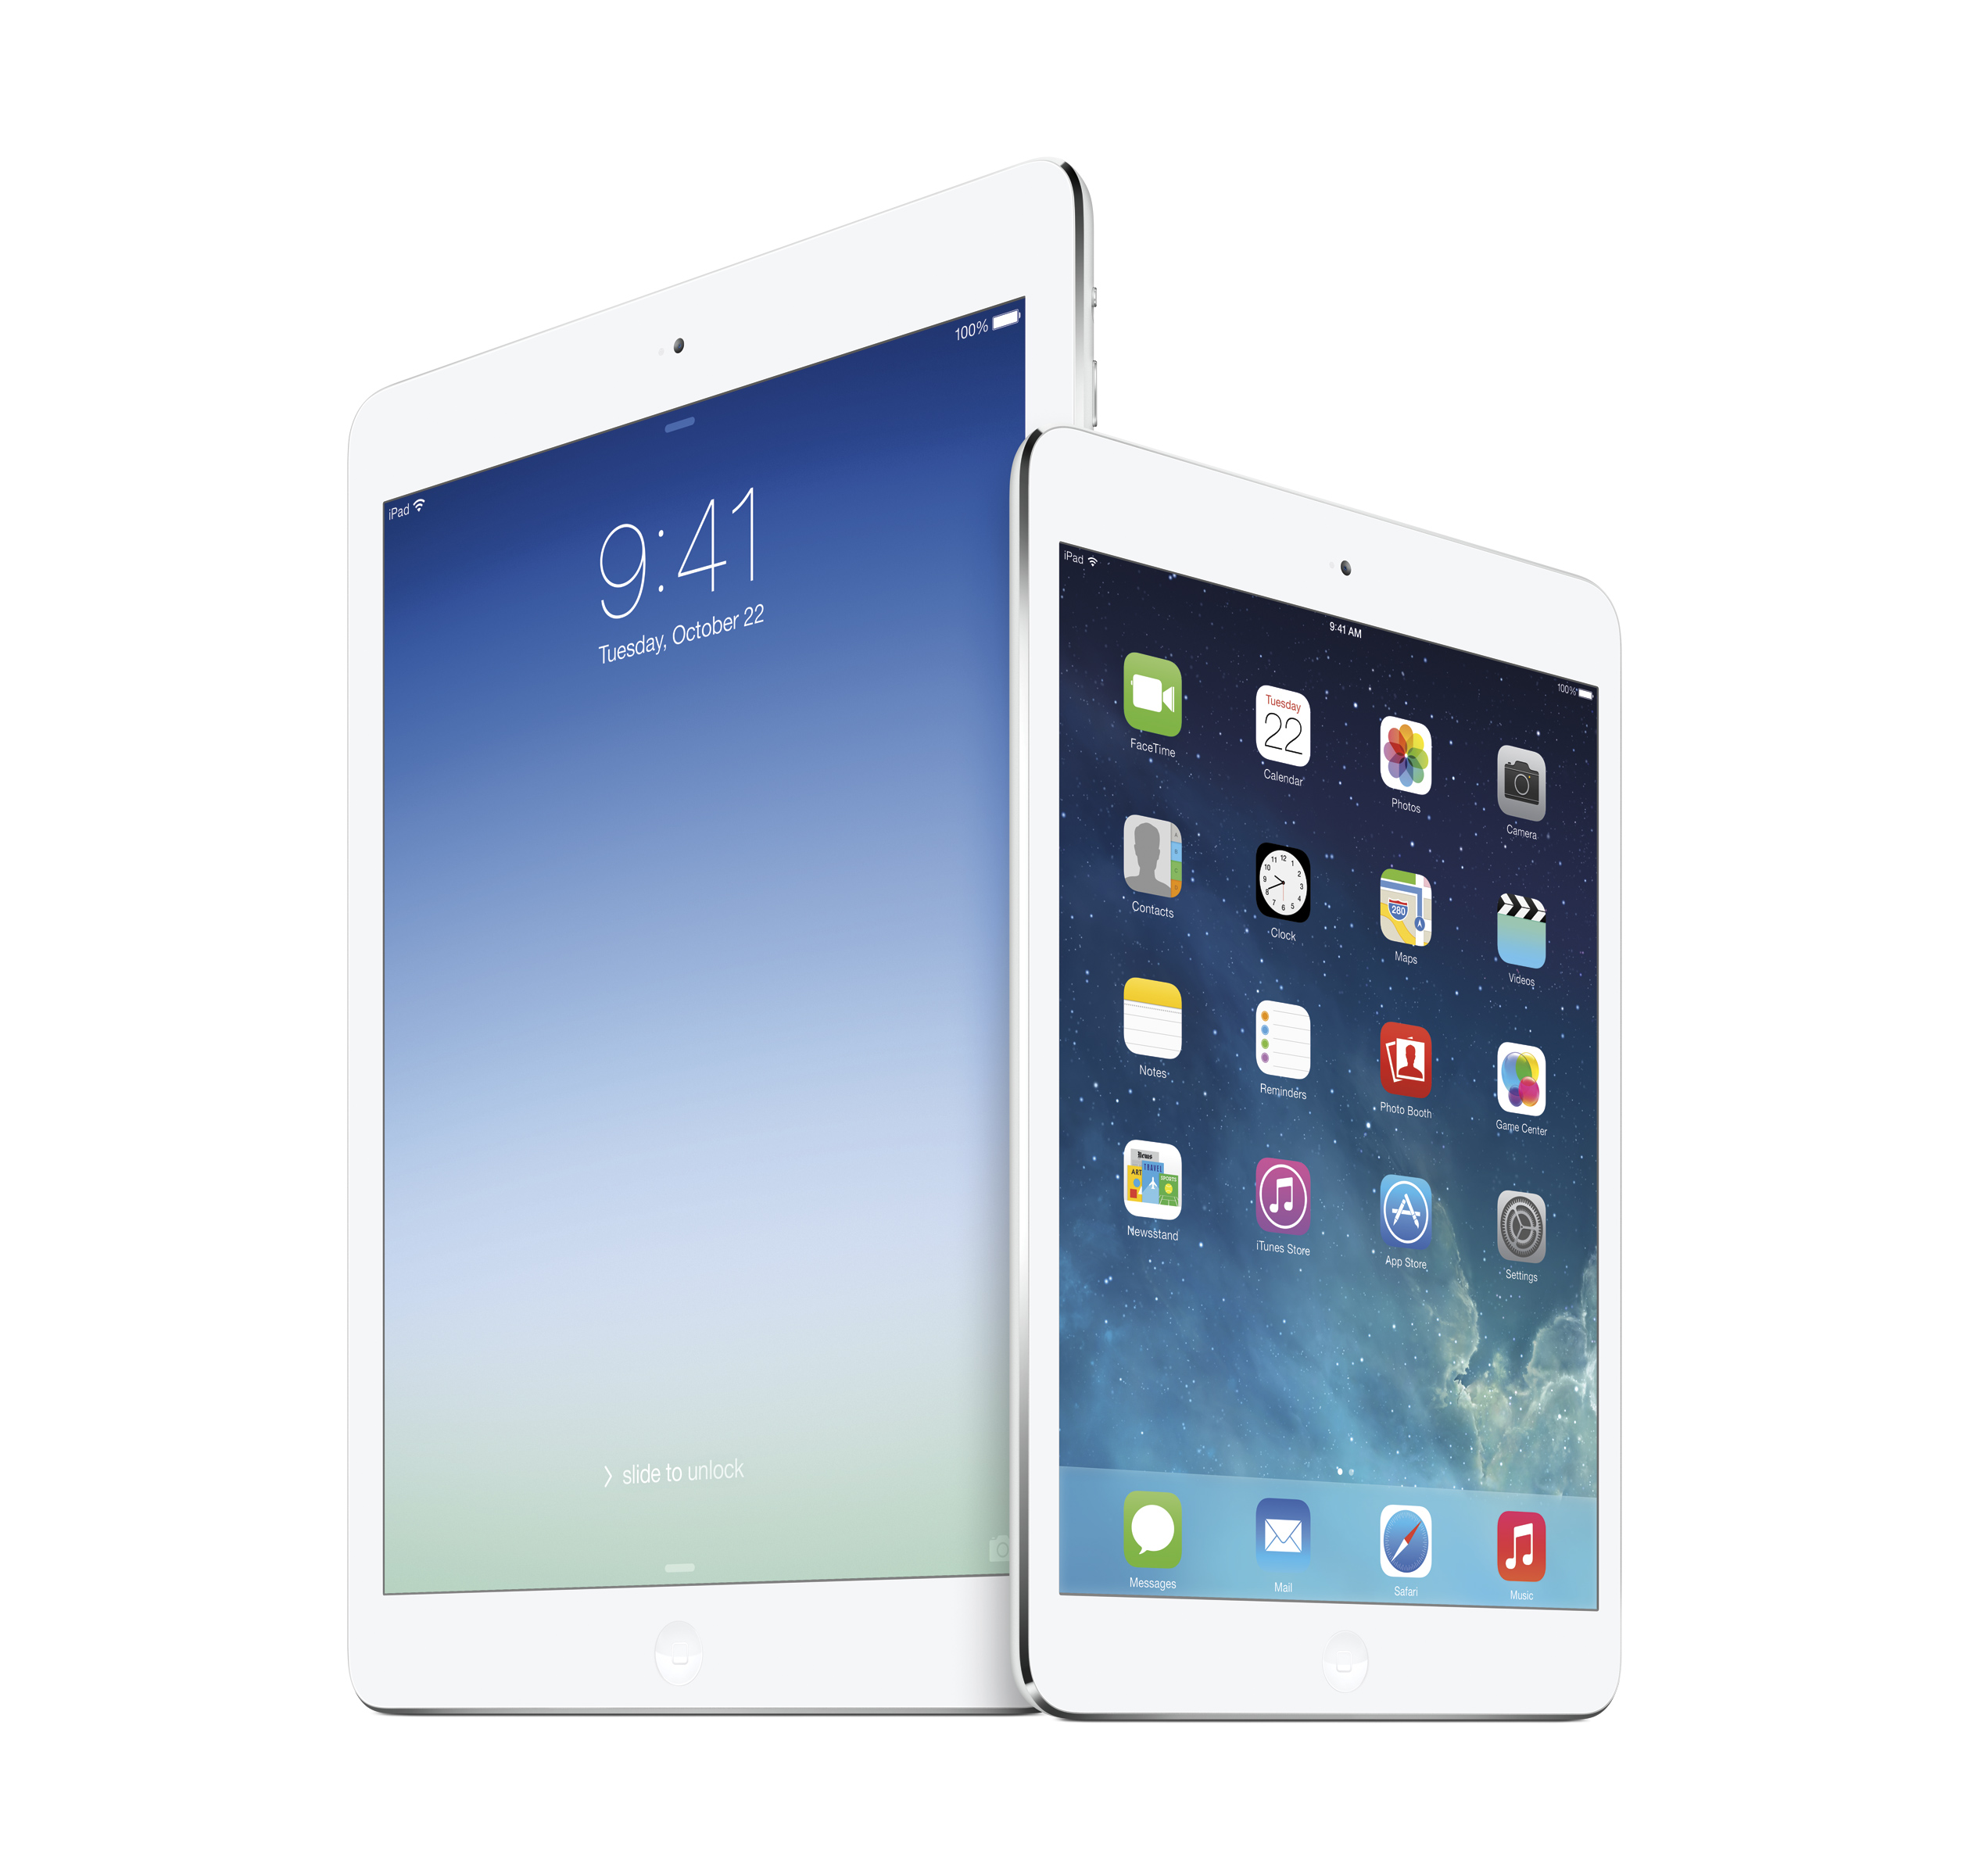 Apple lança iPad Air e iPad mini com tela Retina no Brasil, mas nada de versões de 128 GB